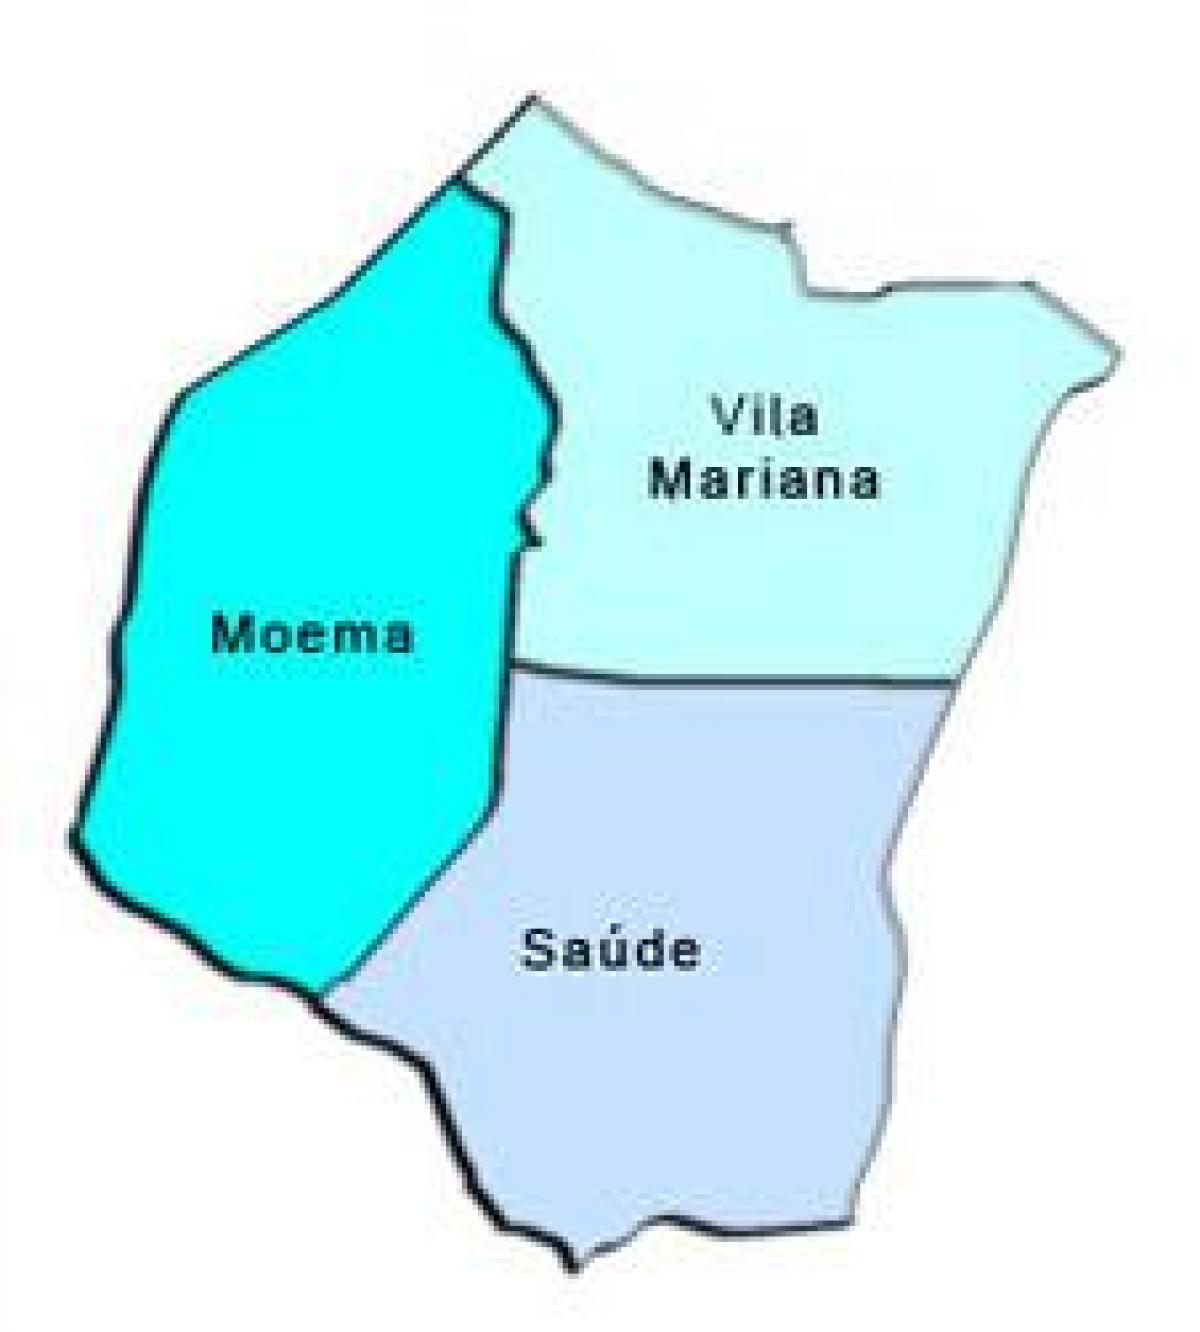 Kaart van Vila Mariana sub-prefektuur